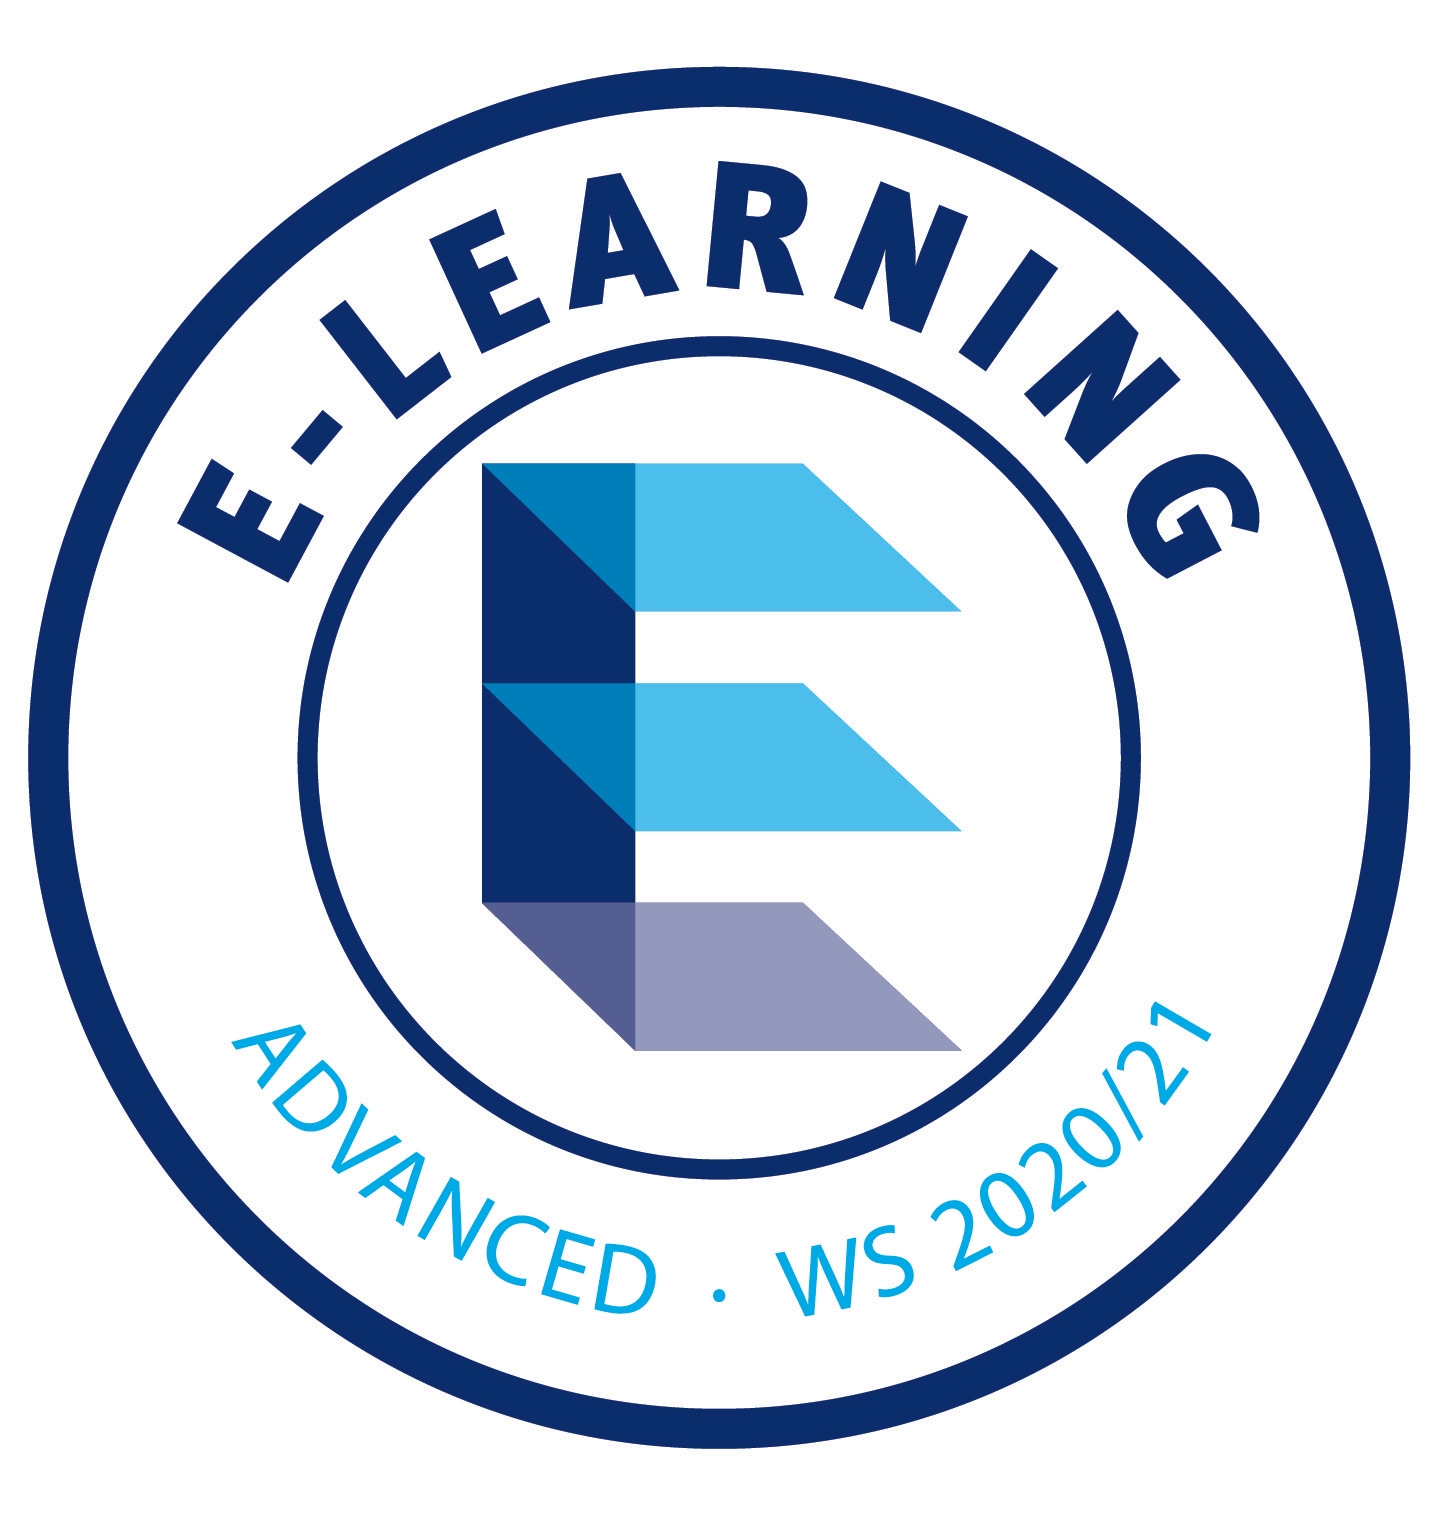 E-Learning Label GET A Wintersemester 2020/21